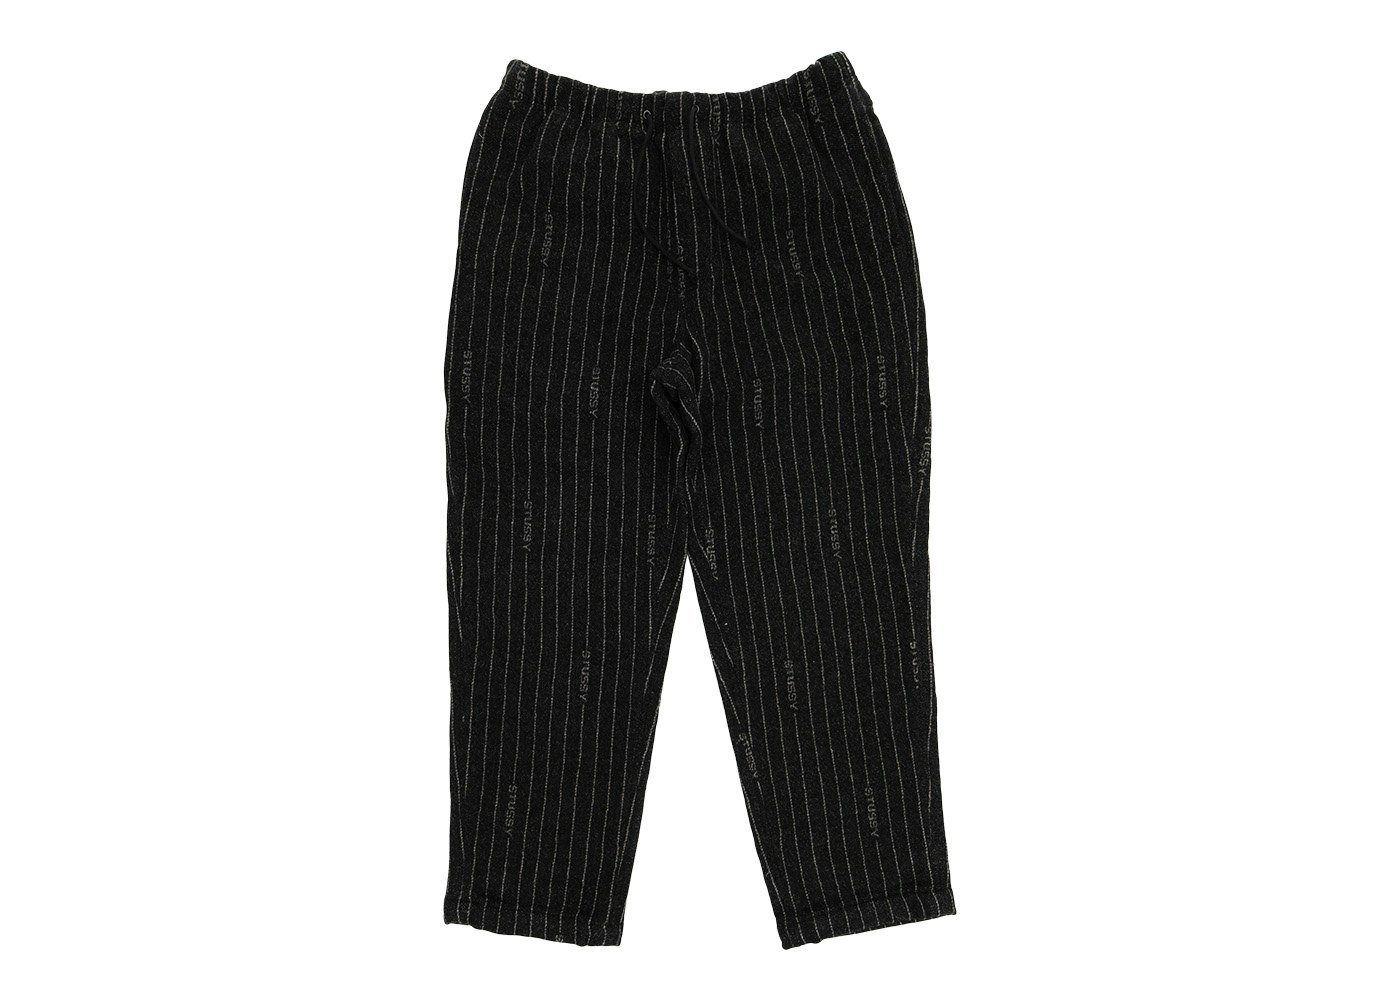 Buy Black Trousers & Pants for Women by Z-One Online | Ajio.com